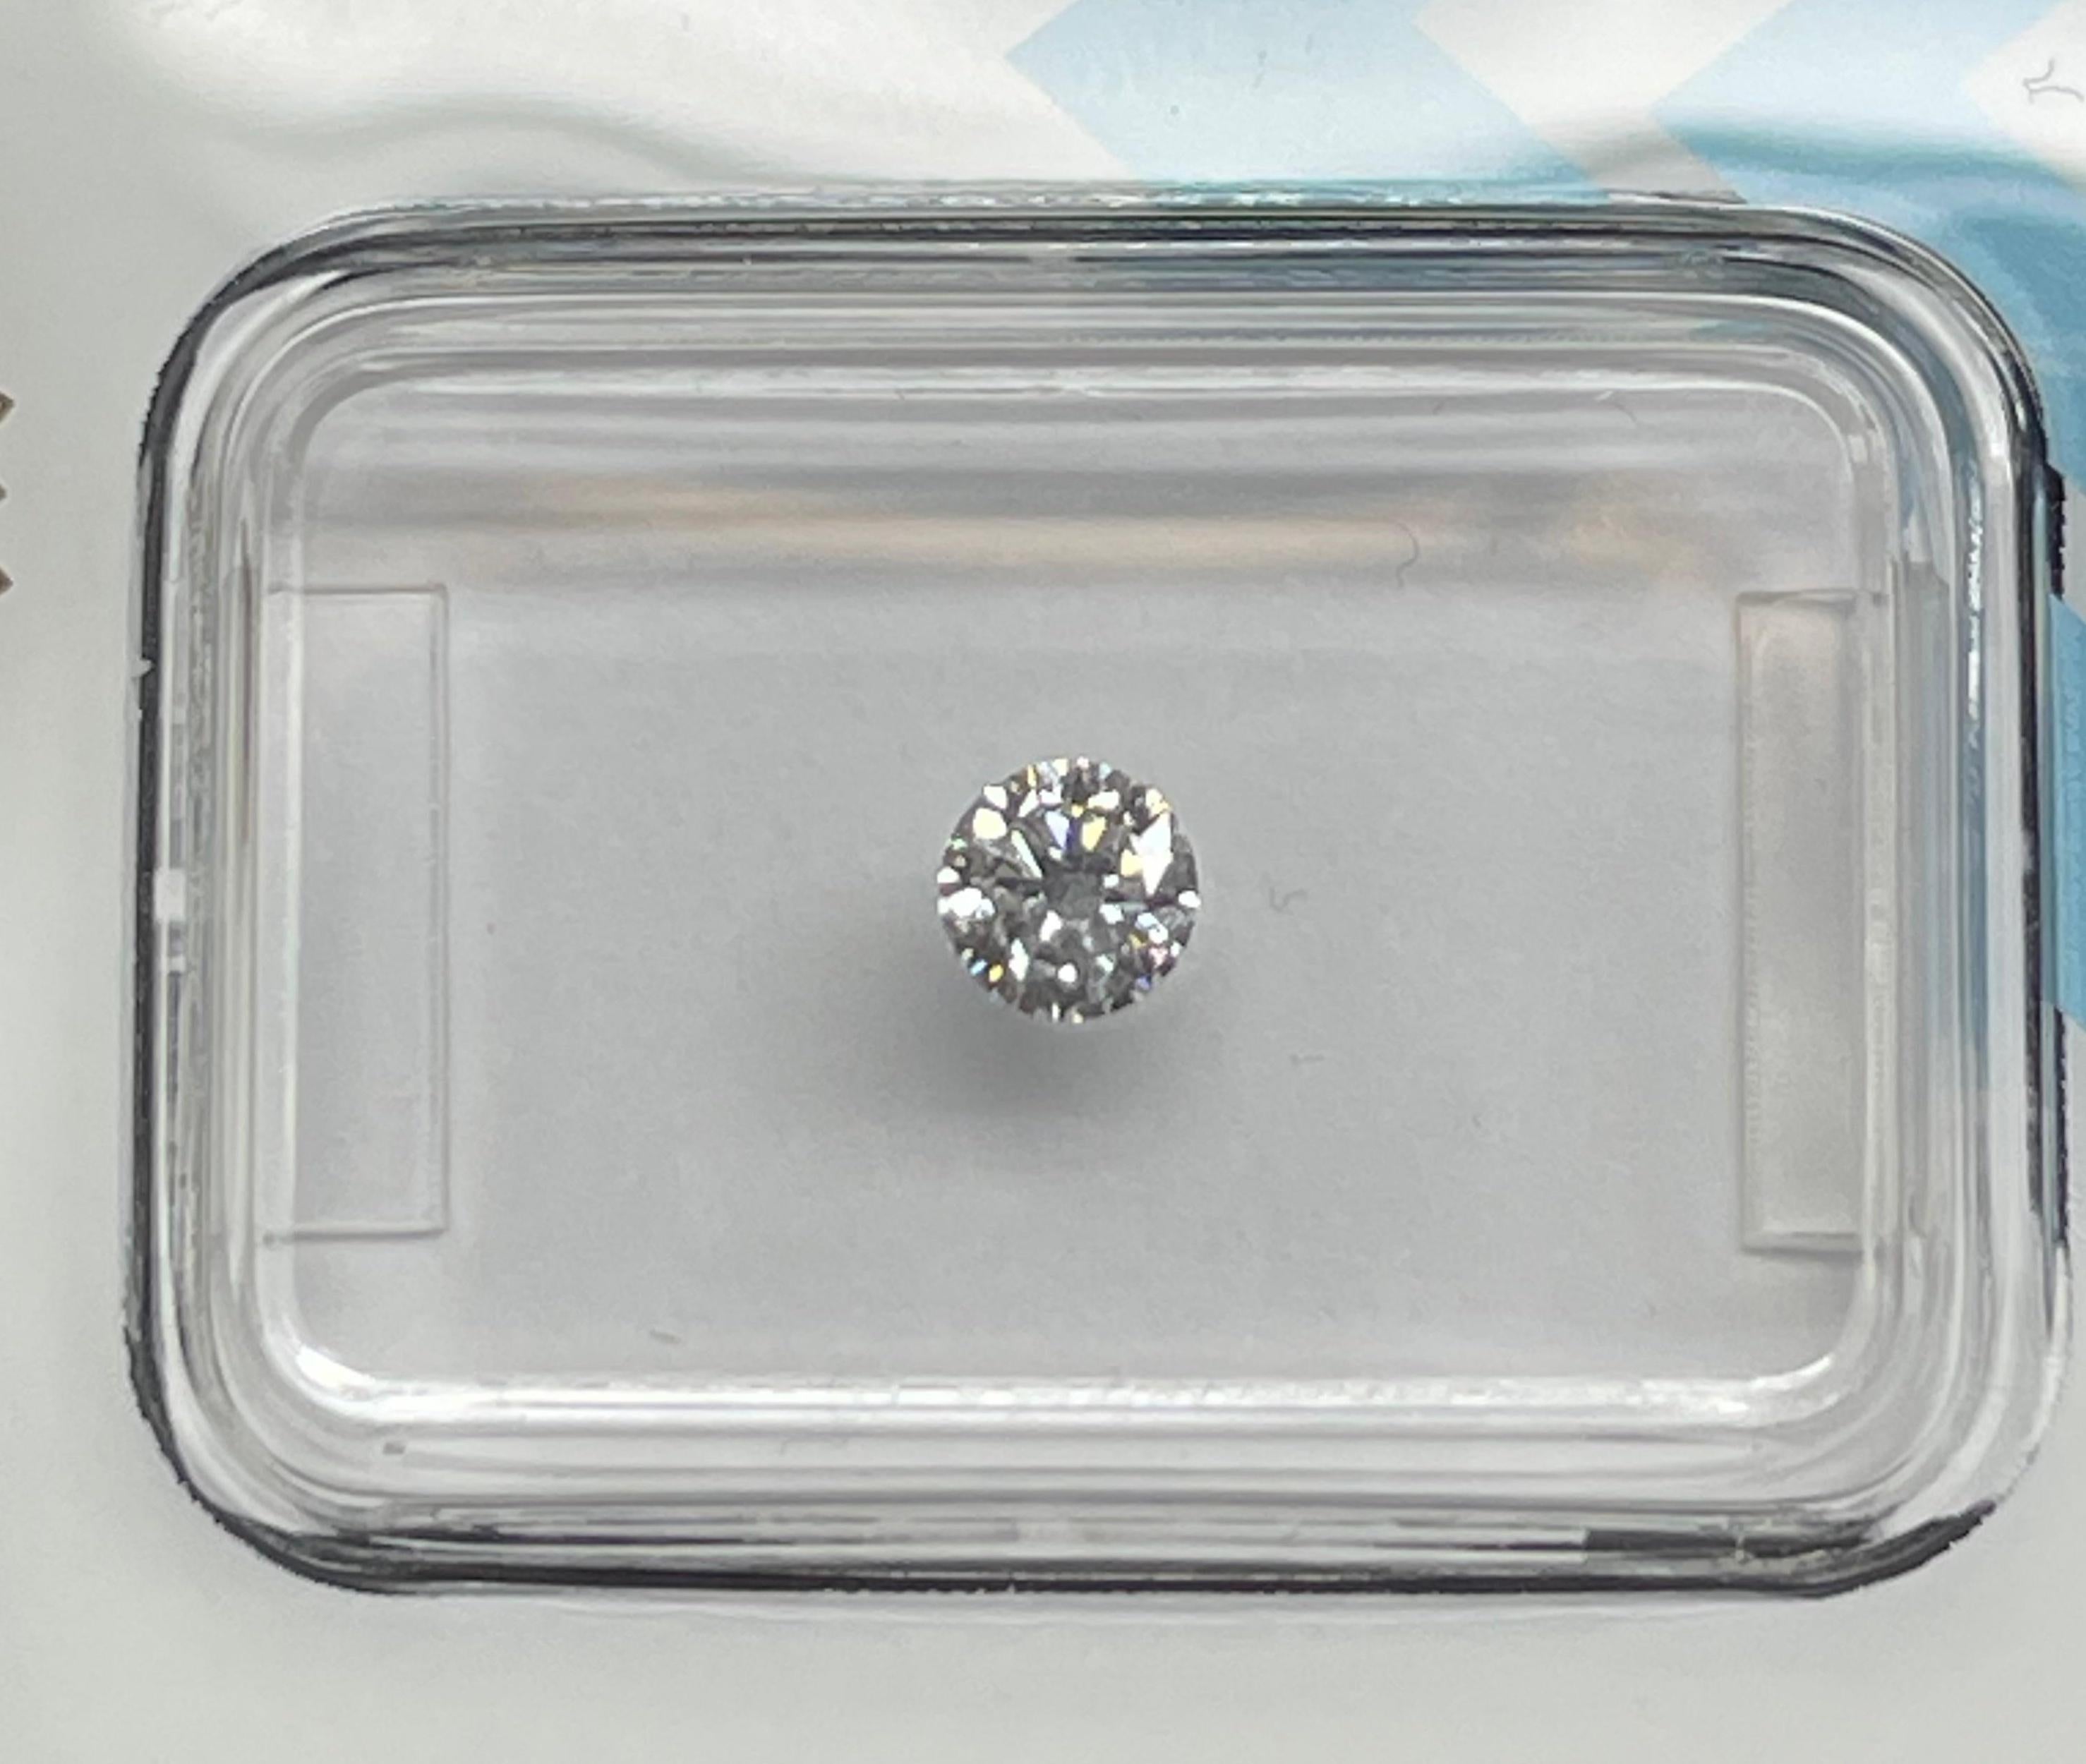 Natural Diamond graded by IGI.

Shape: Round Brilliant
Weight: 0.23 CT
Color: D
Clarity: SI1
Cut: Very Good
Polish: Excellent
Symmetry: Excellent
Fluorescence: None
Laser inscription : IGI 630434206